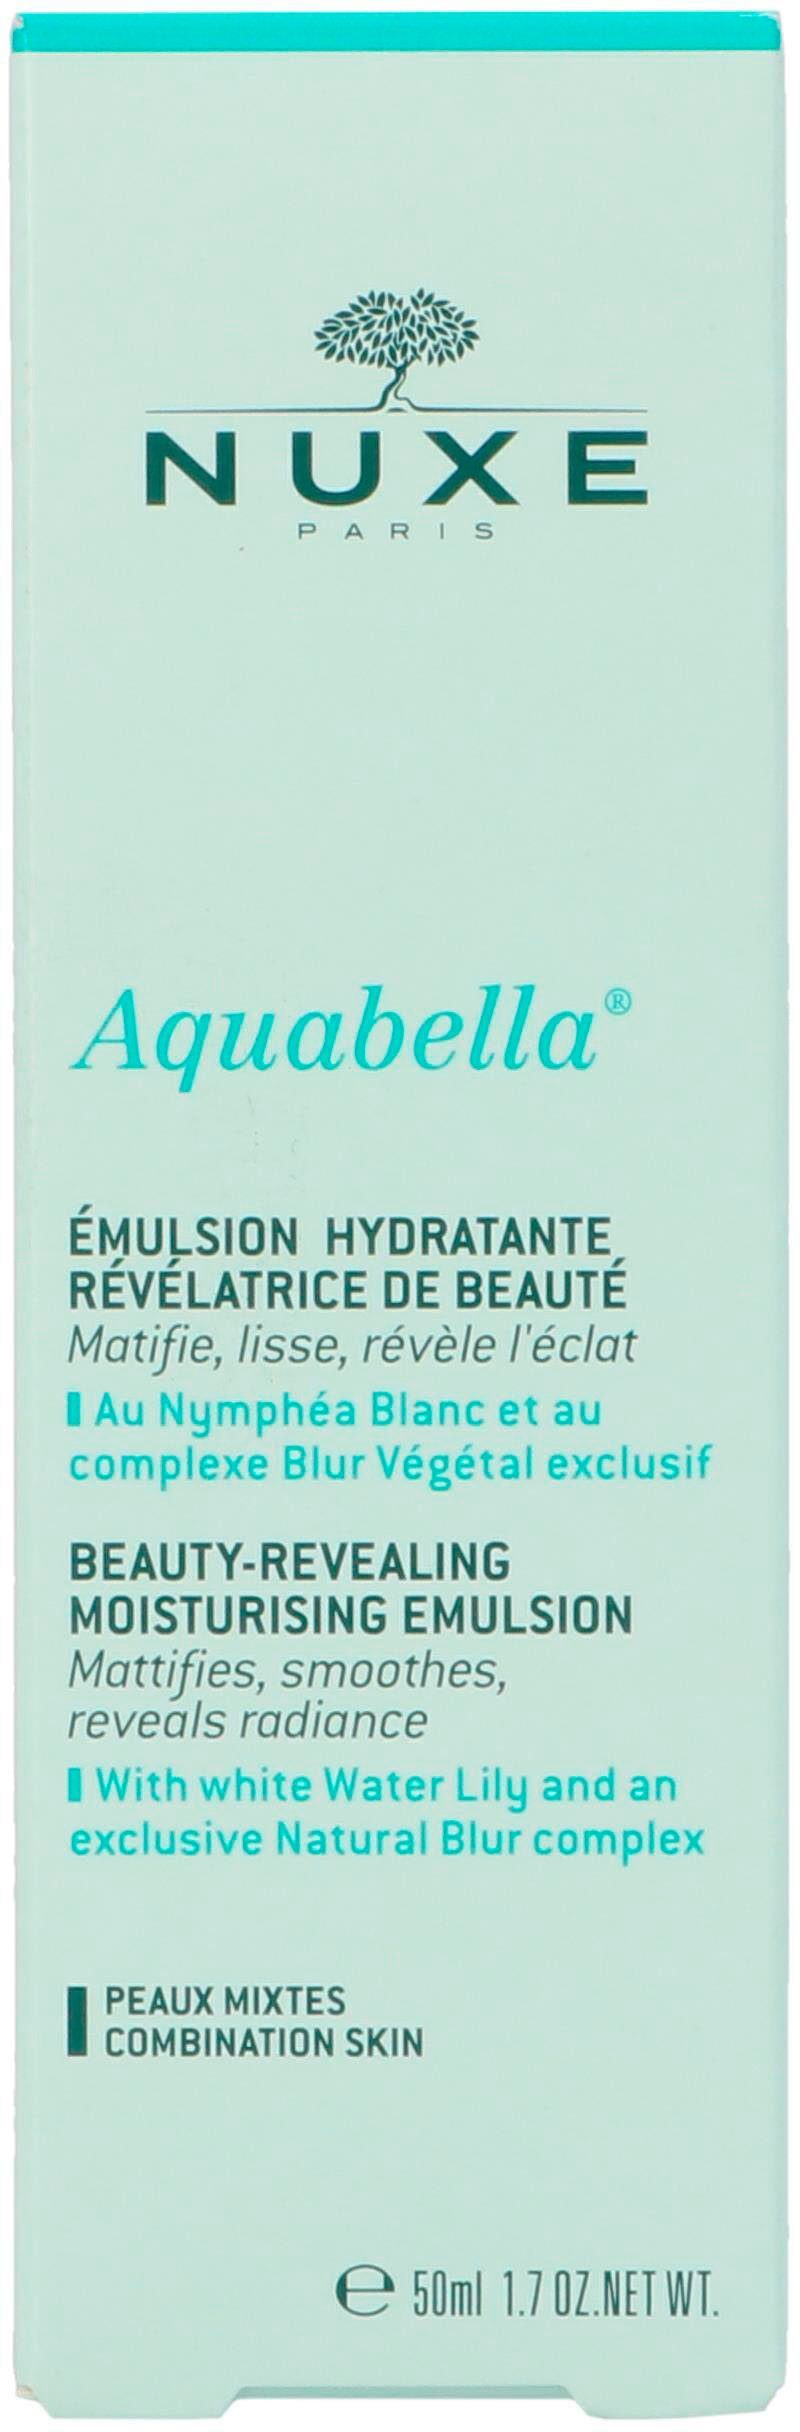 Nuxe Gesichtsserum Aquabella Emulsion Beauty Moisturizing Revealing